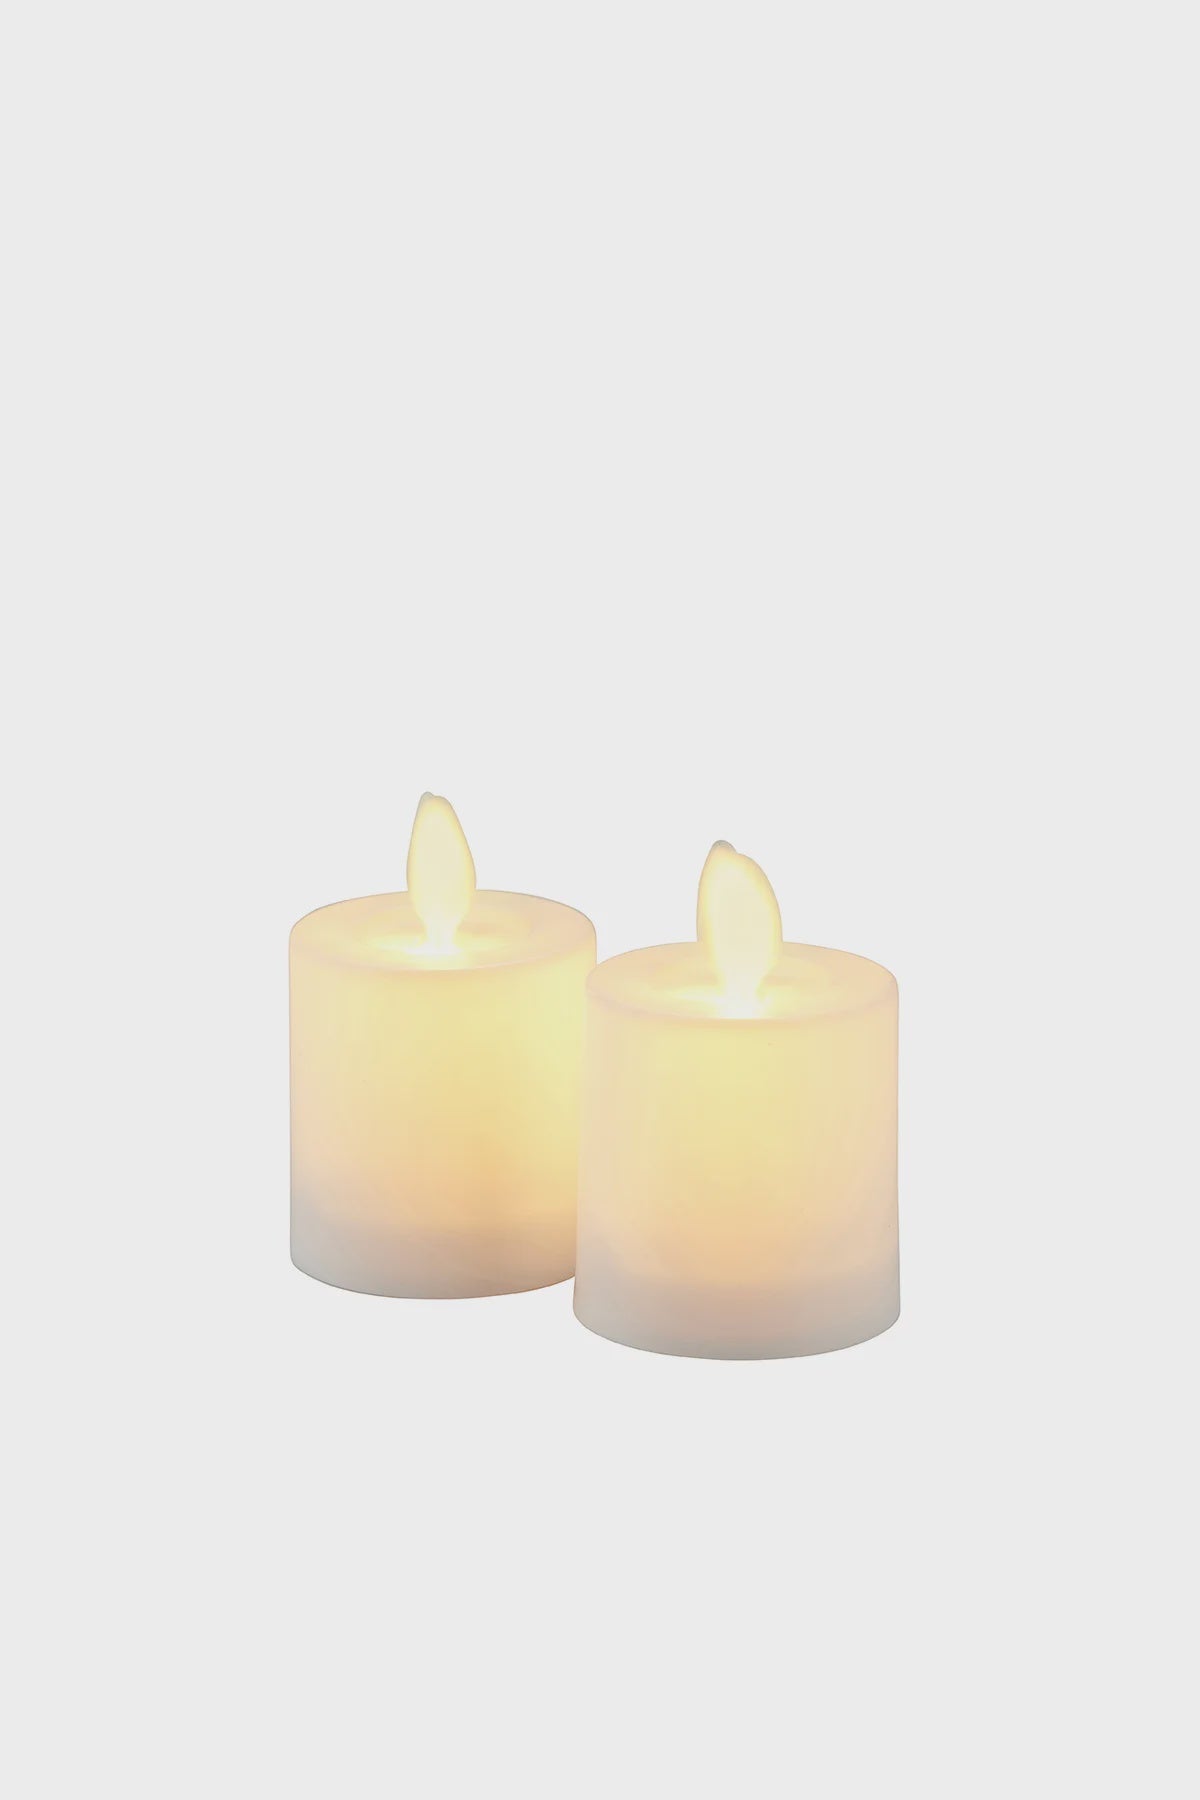 Sirius Sara Tealight Candle Set of 2 White